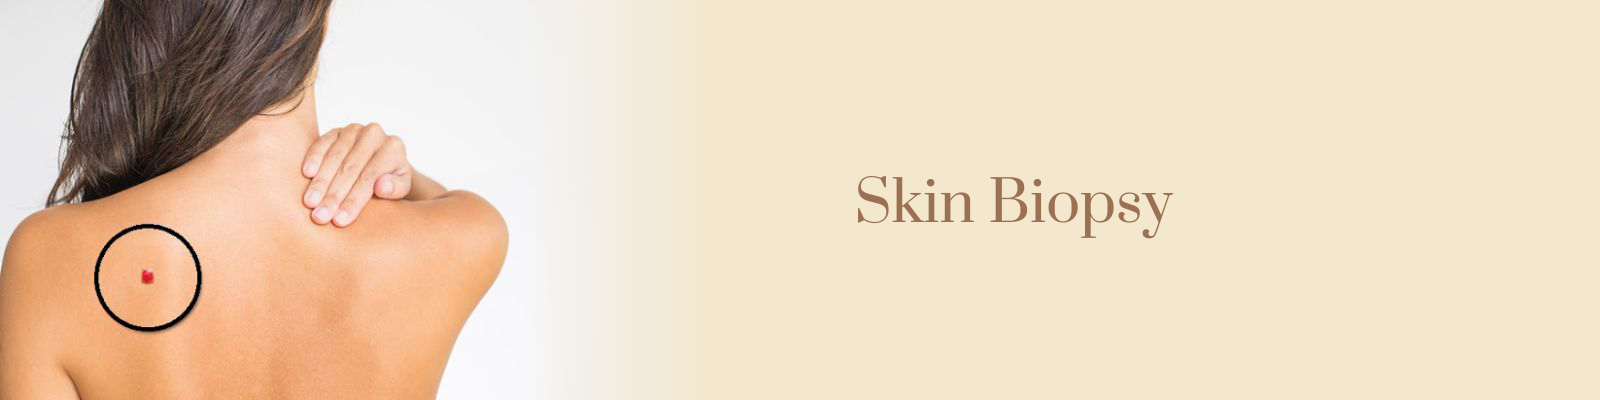 Skin Biopsy Treatment in Delhi